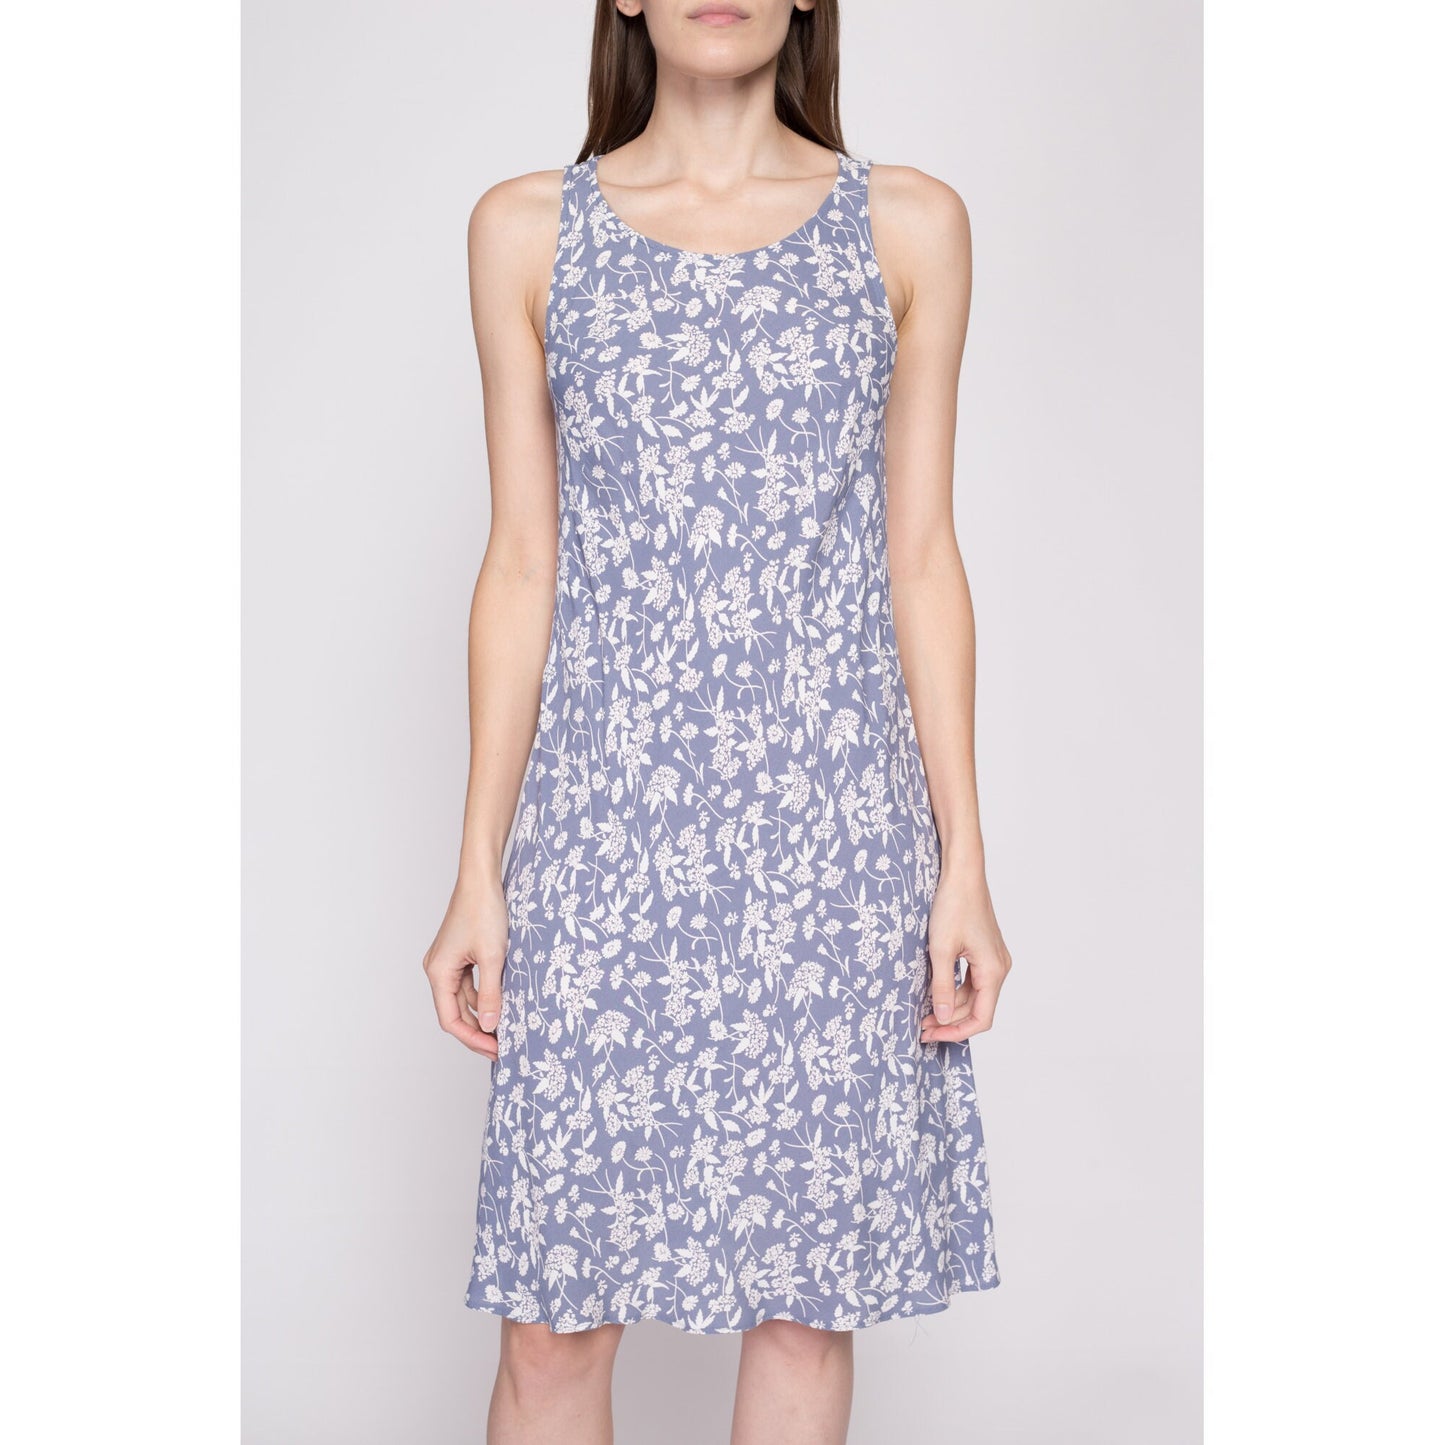 M| Vintage Laura Ashley Floral Sundress - Medium | 90s Y2K Periwinkle Blue Bias Cut Sleeveless Tank Dress